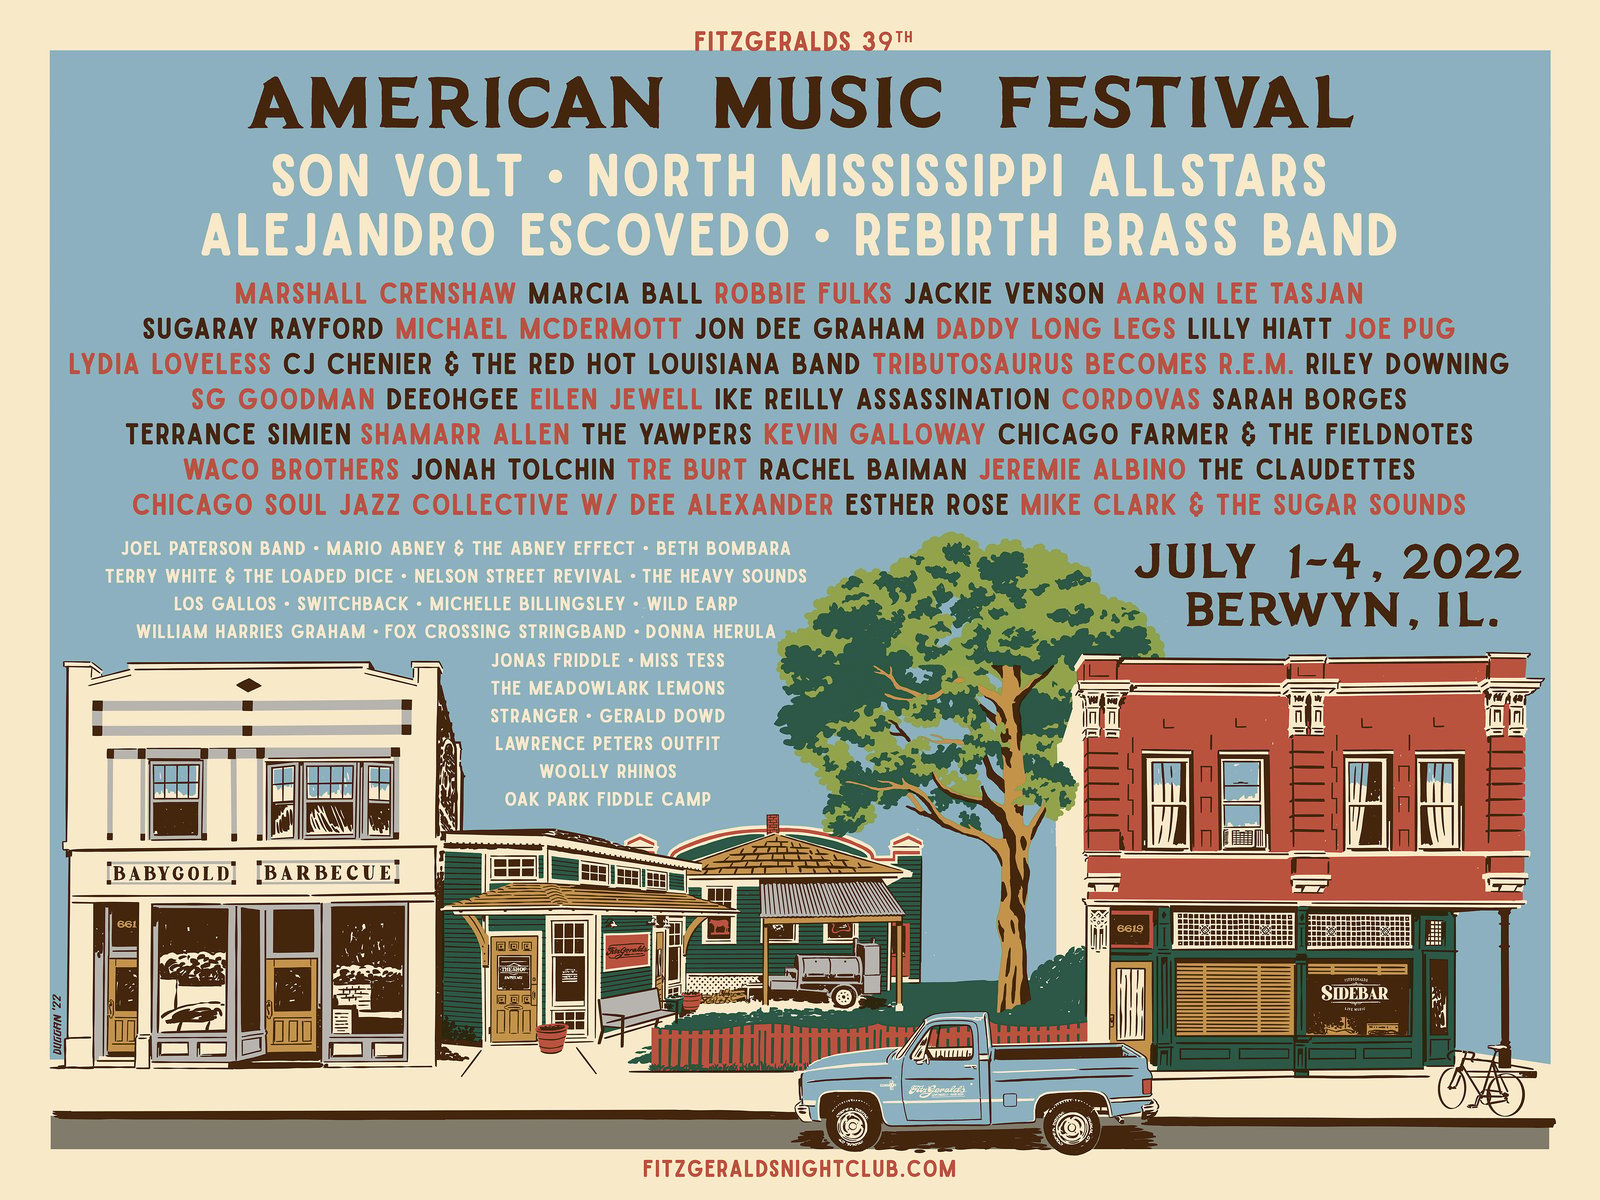 Fitzgerald's American Music Fest / Ryan Duggan